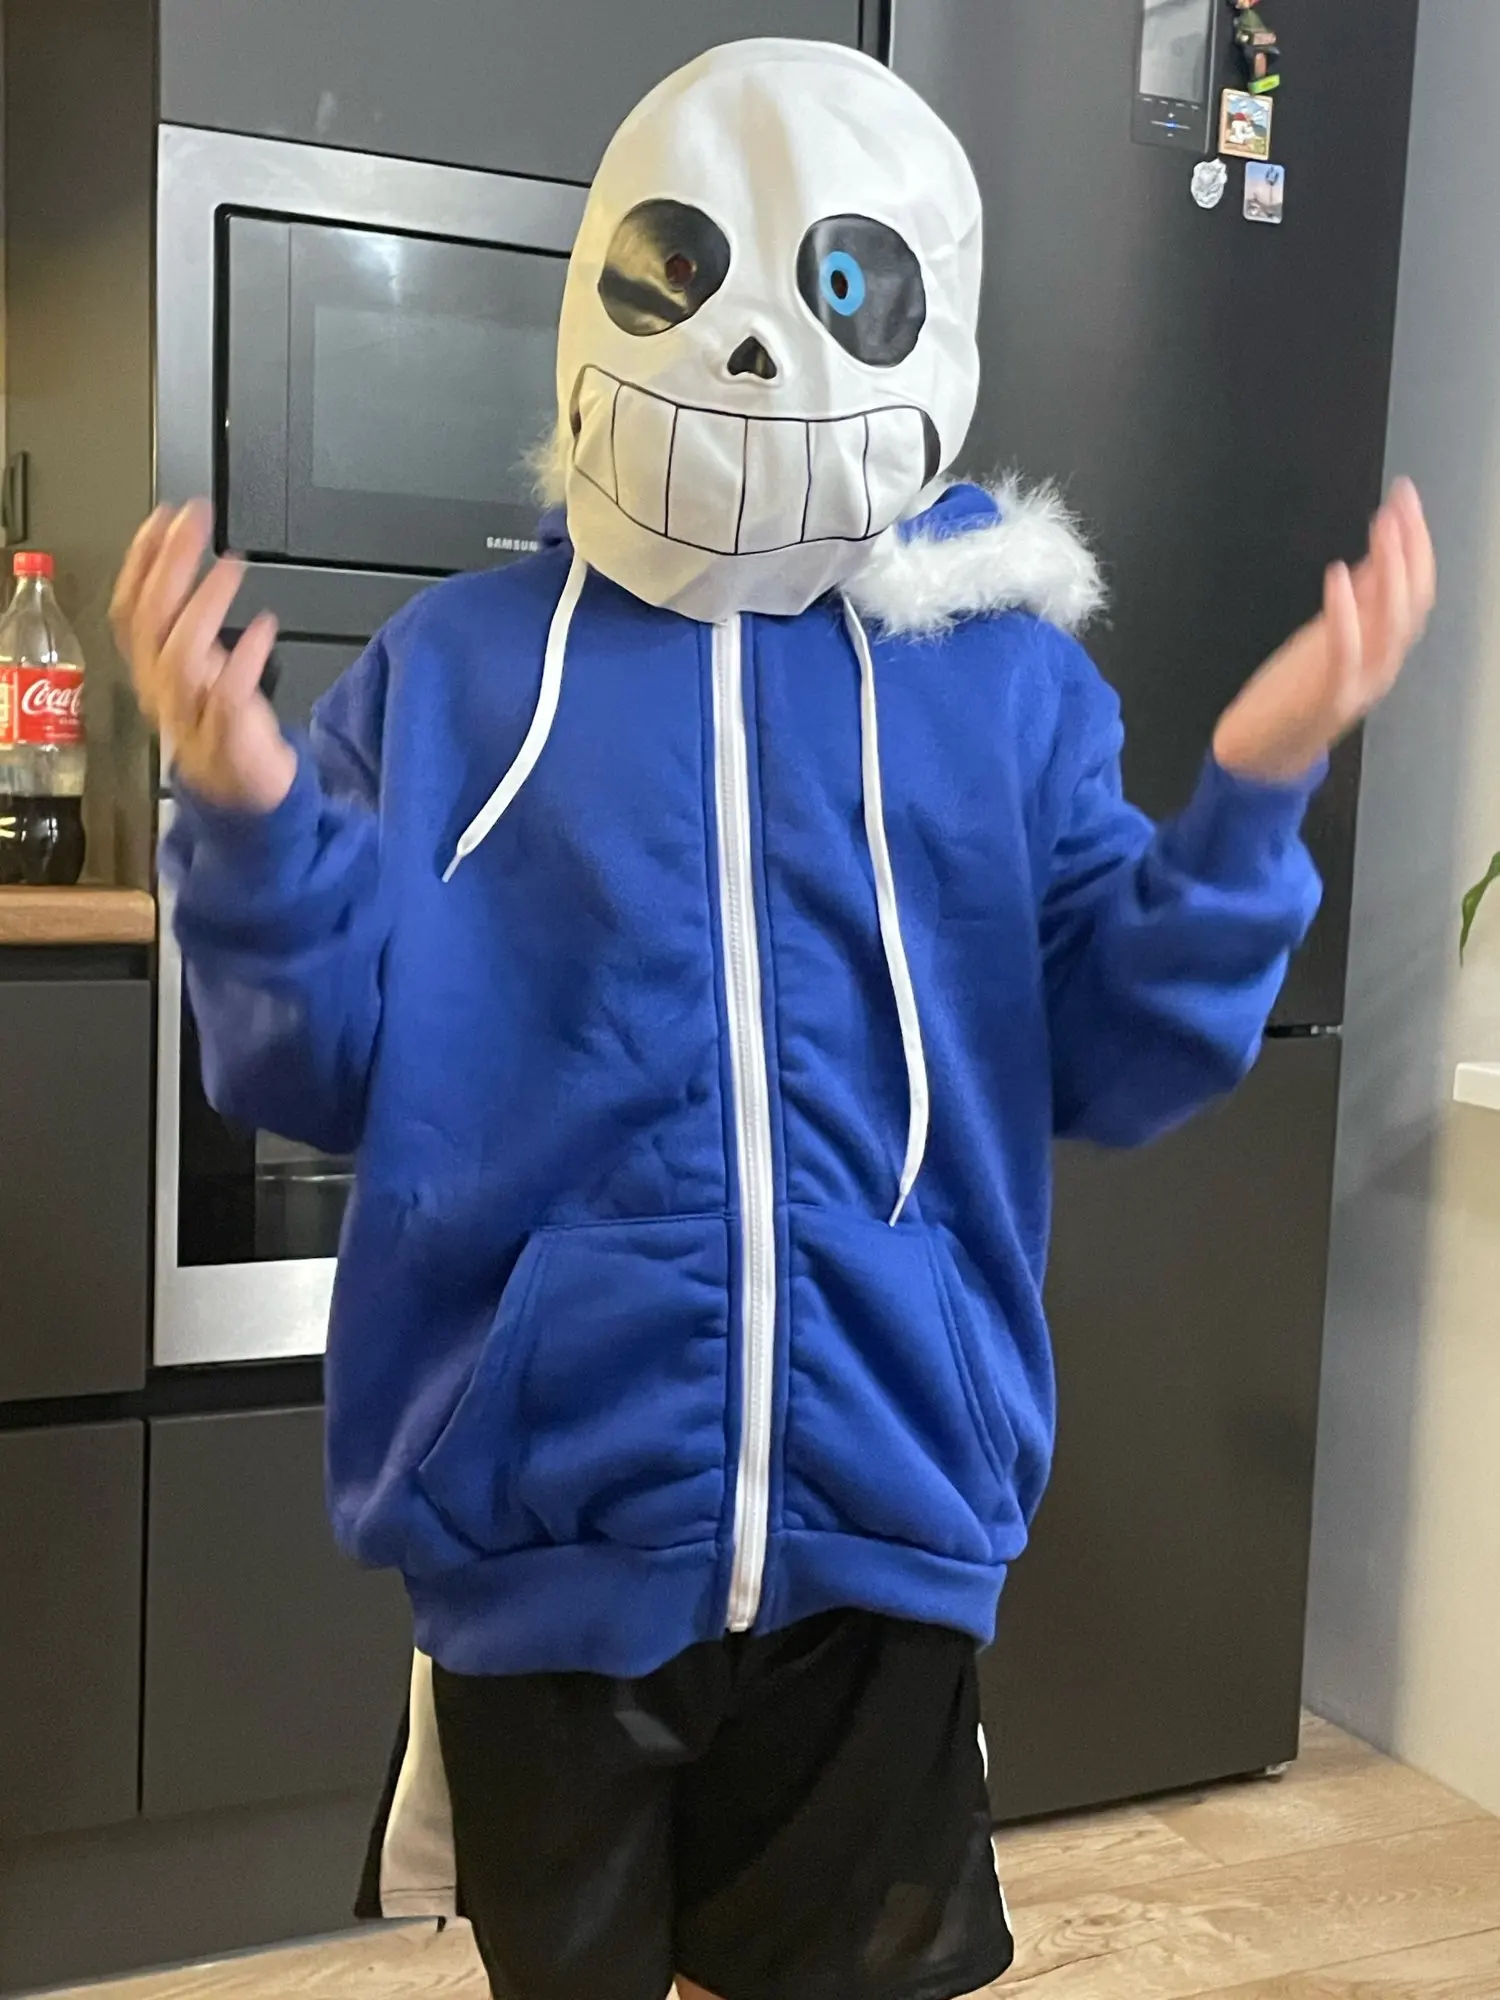 Chomel Undertale Sans Cosplay Hoodies Latex Mask Cool Skeleton Cos Blue  Coat Halloween Cosplay Costume Unisex Jacket Headgear